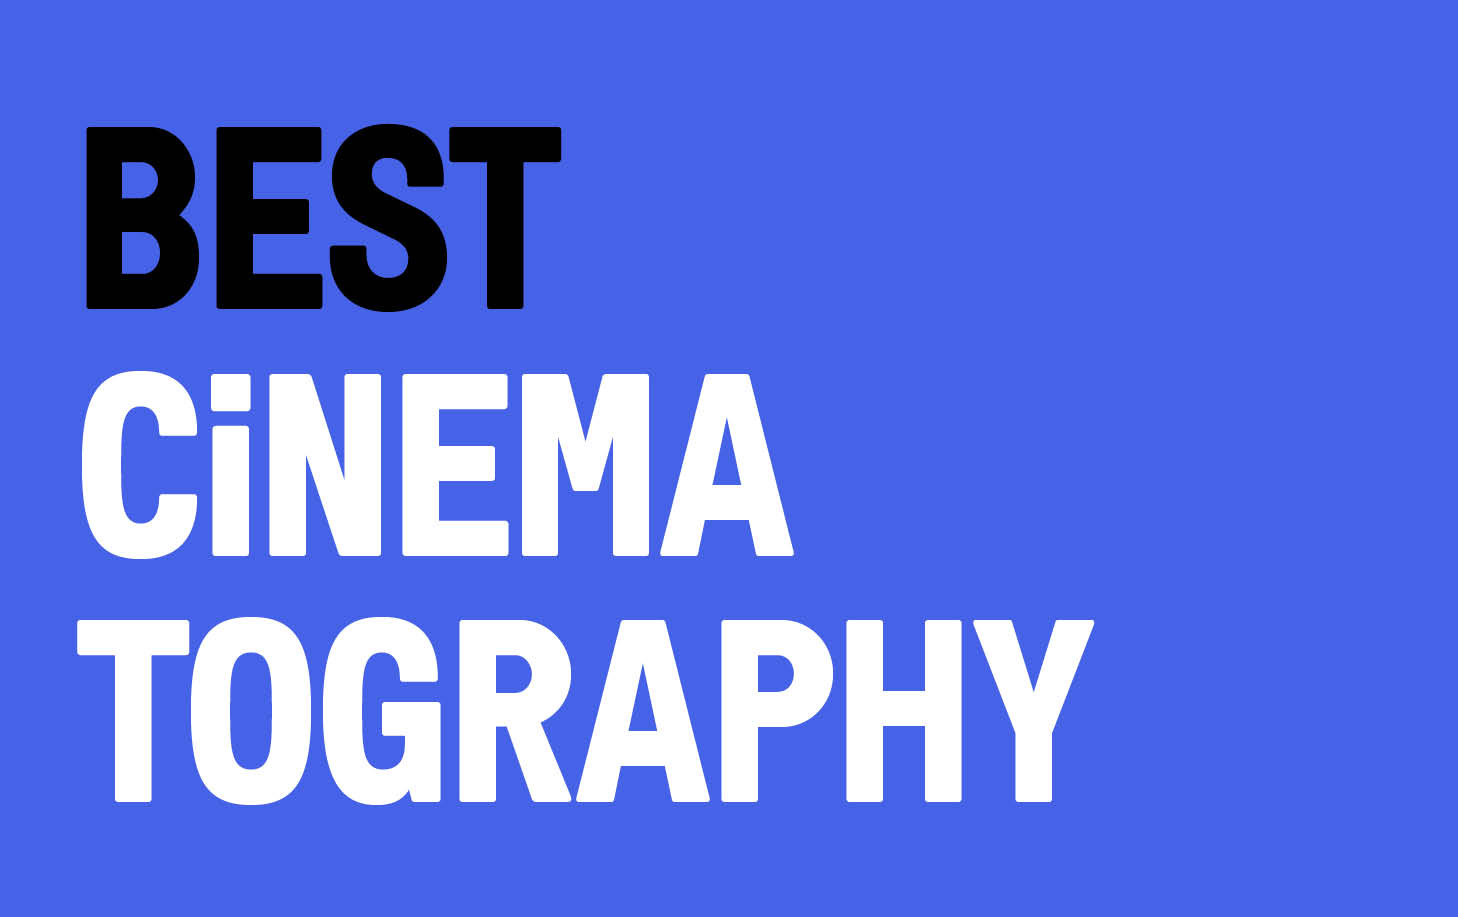 Film Categories